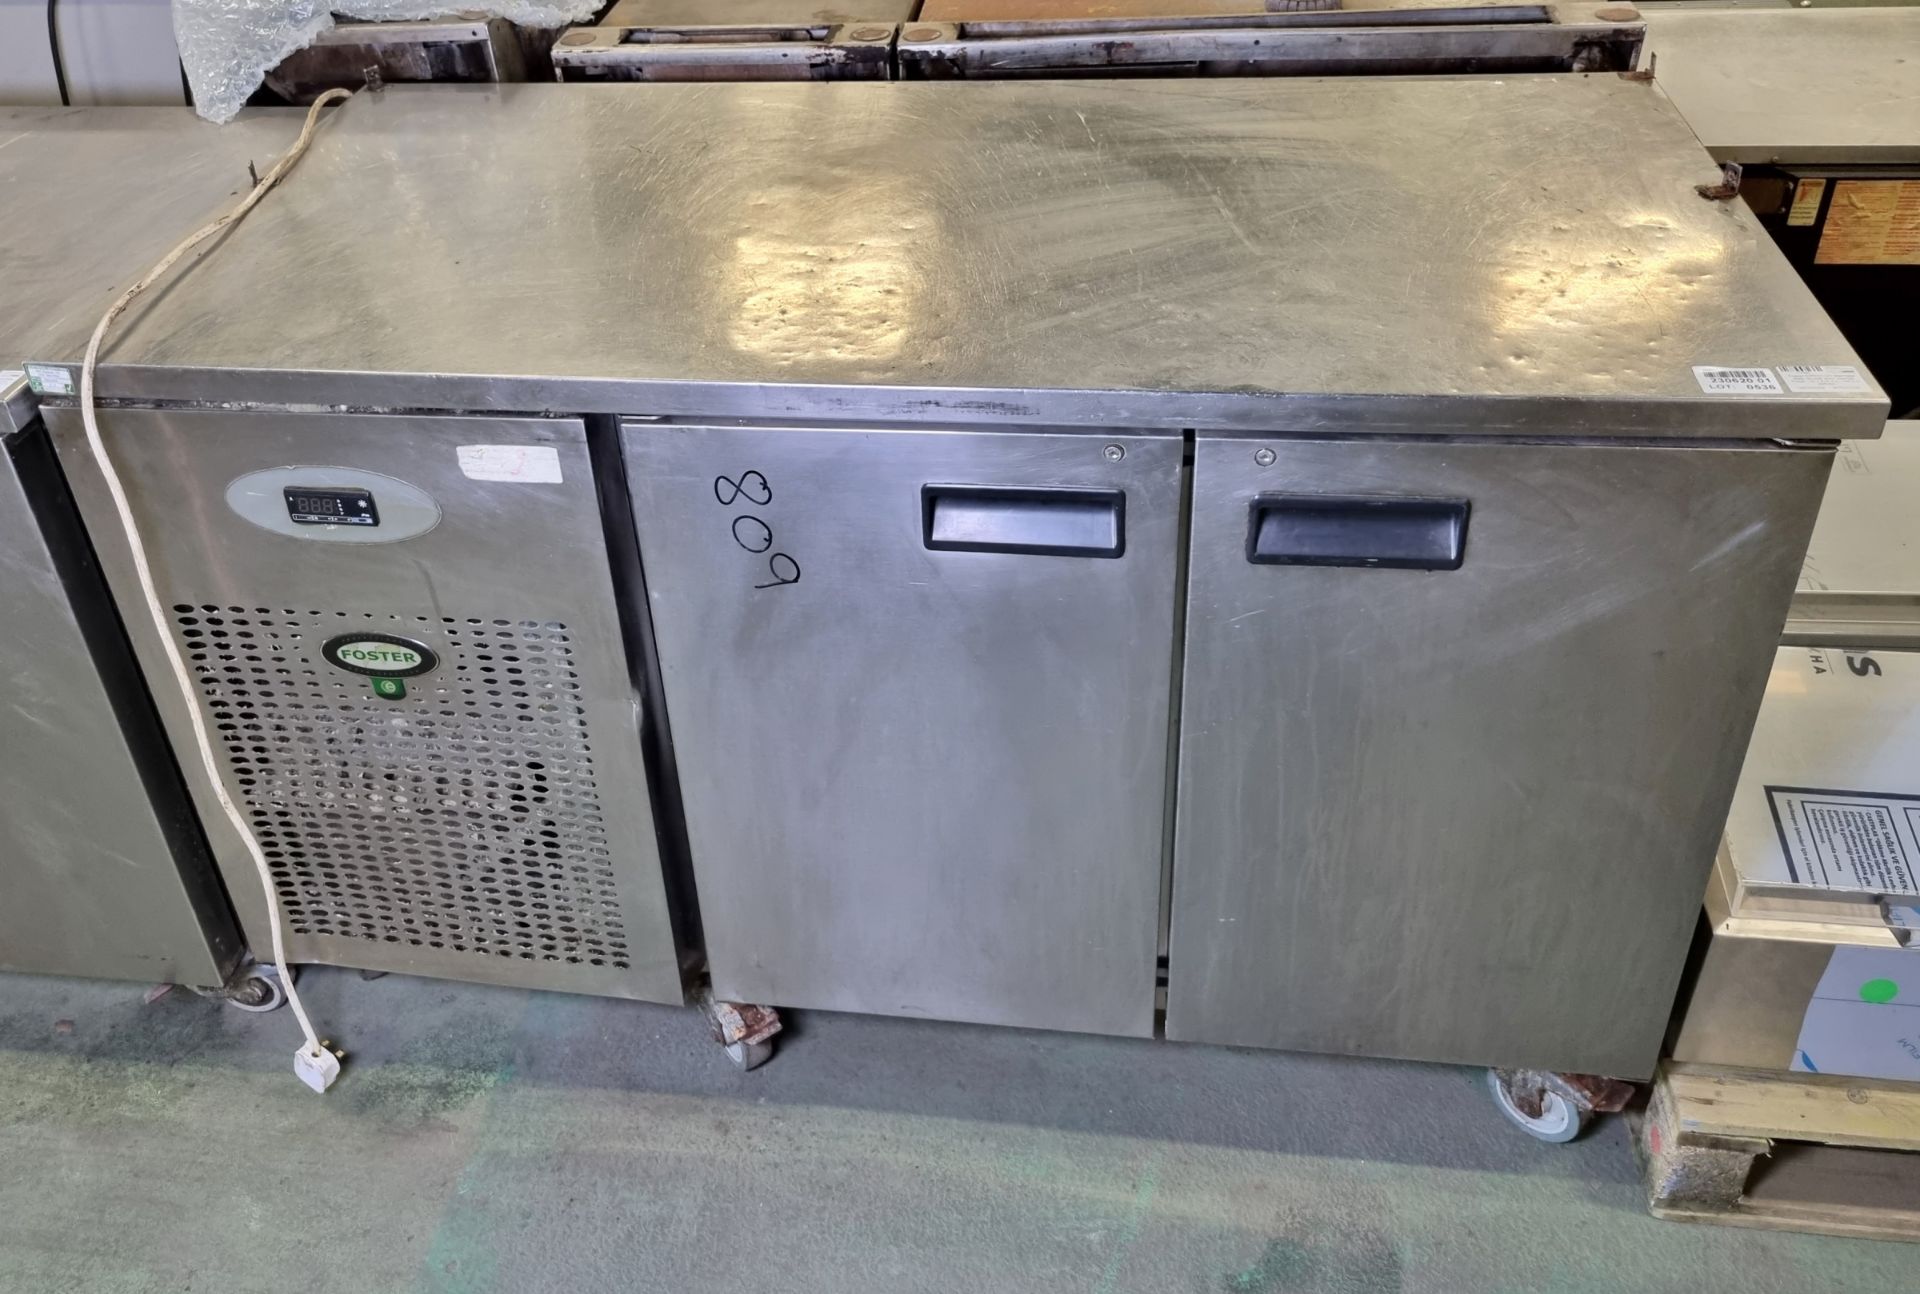 Foster EPRO 1/2H stainless steel double door counter fridge - W 1415 x D 705 x H 995mm - Image 2 of 5